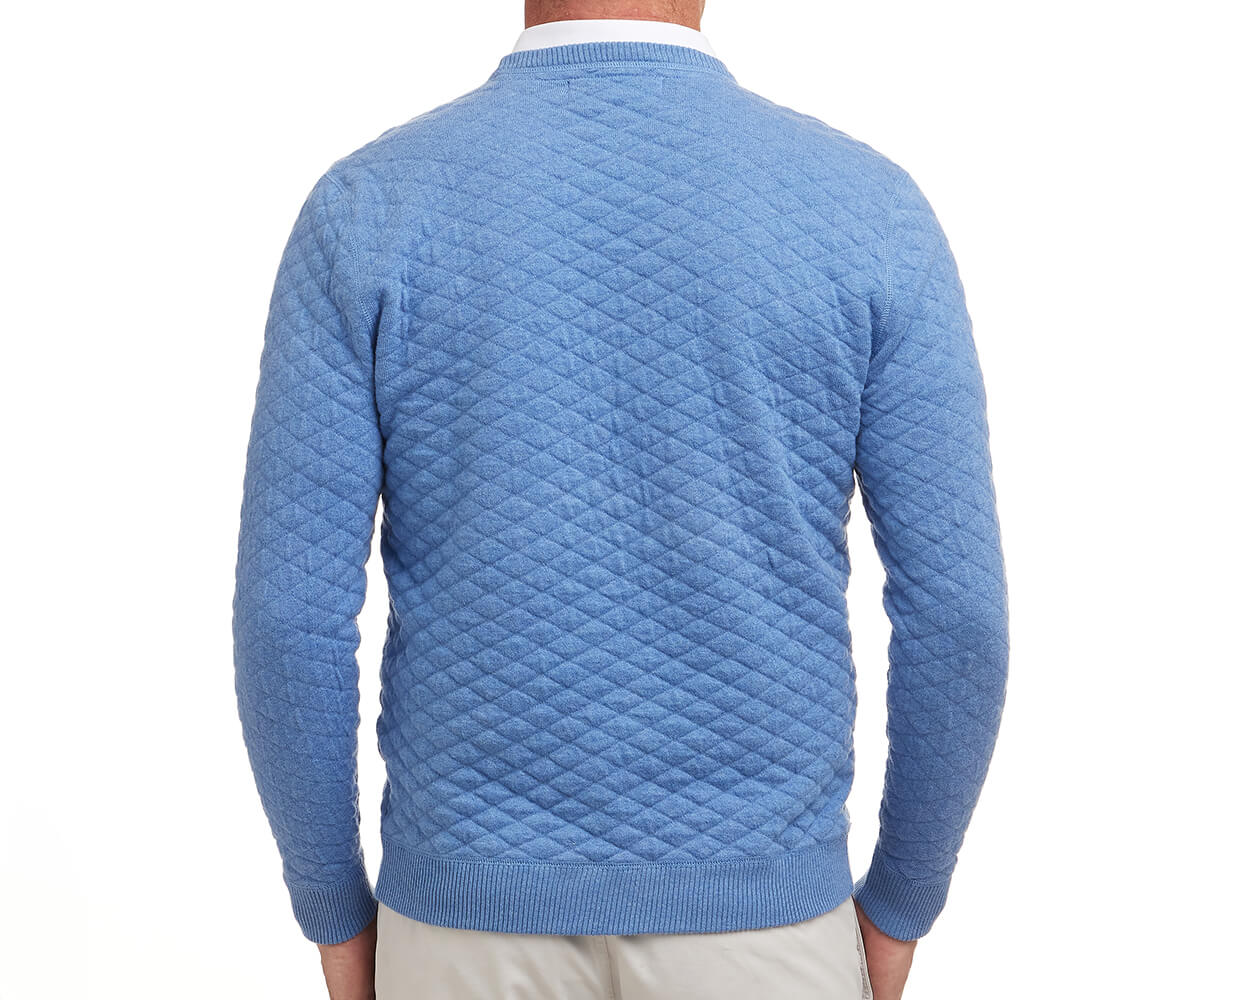 Holderness & Bourne  The Ward Men’s Light Blue Cotton Sweater